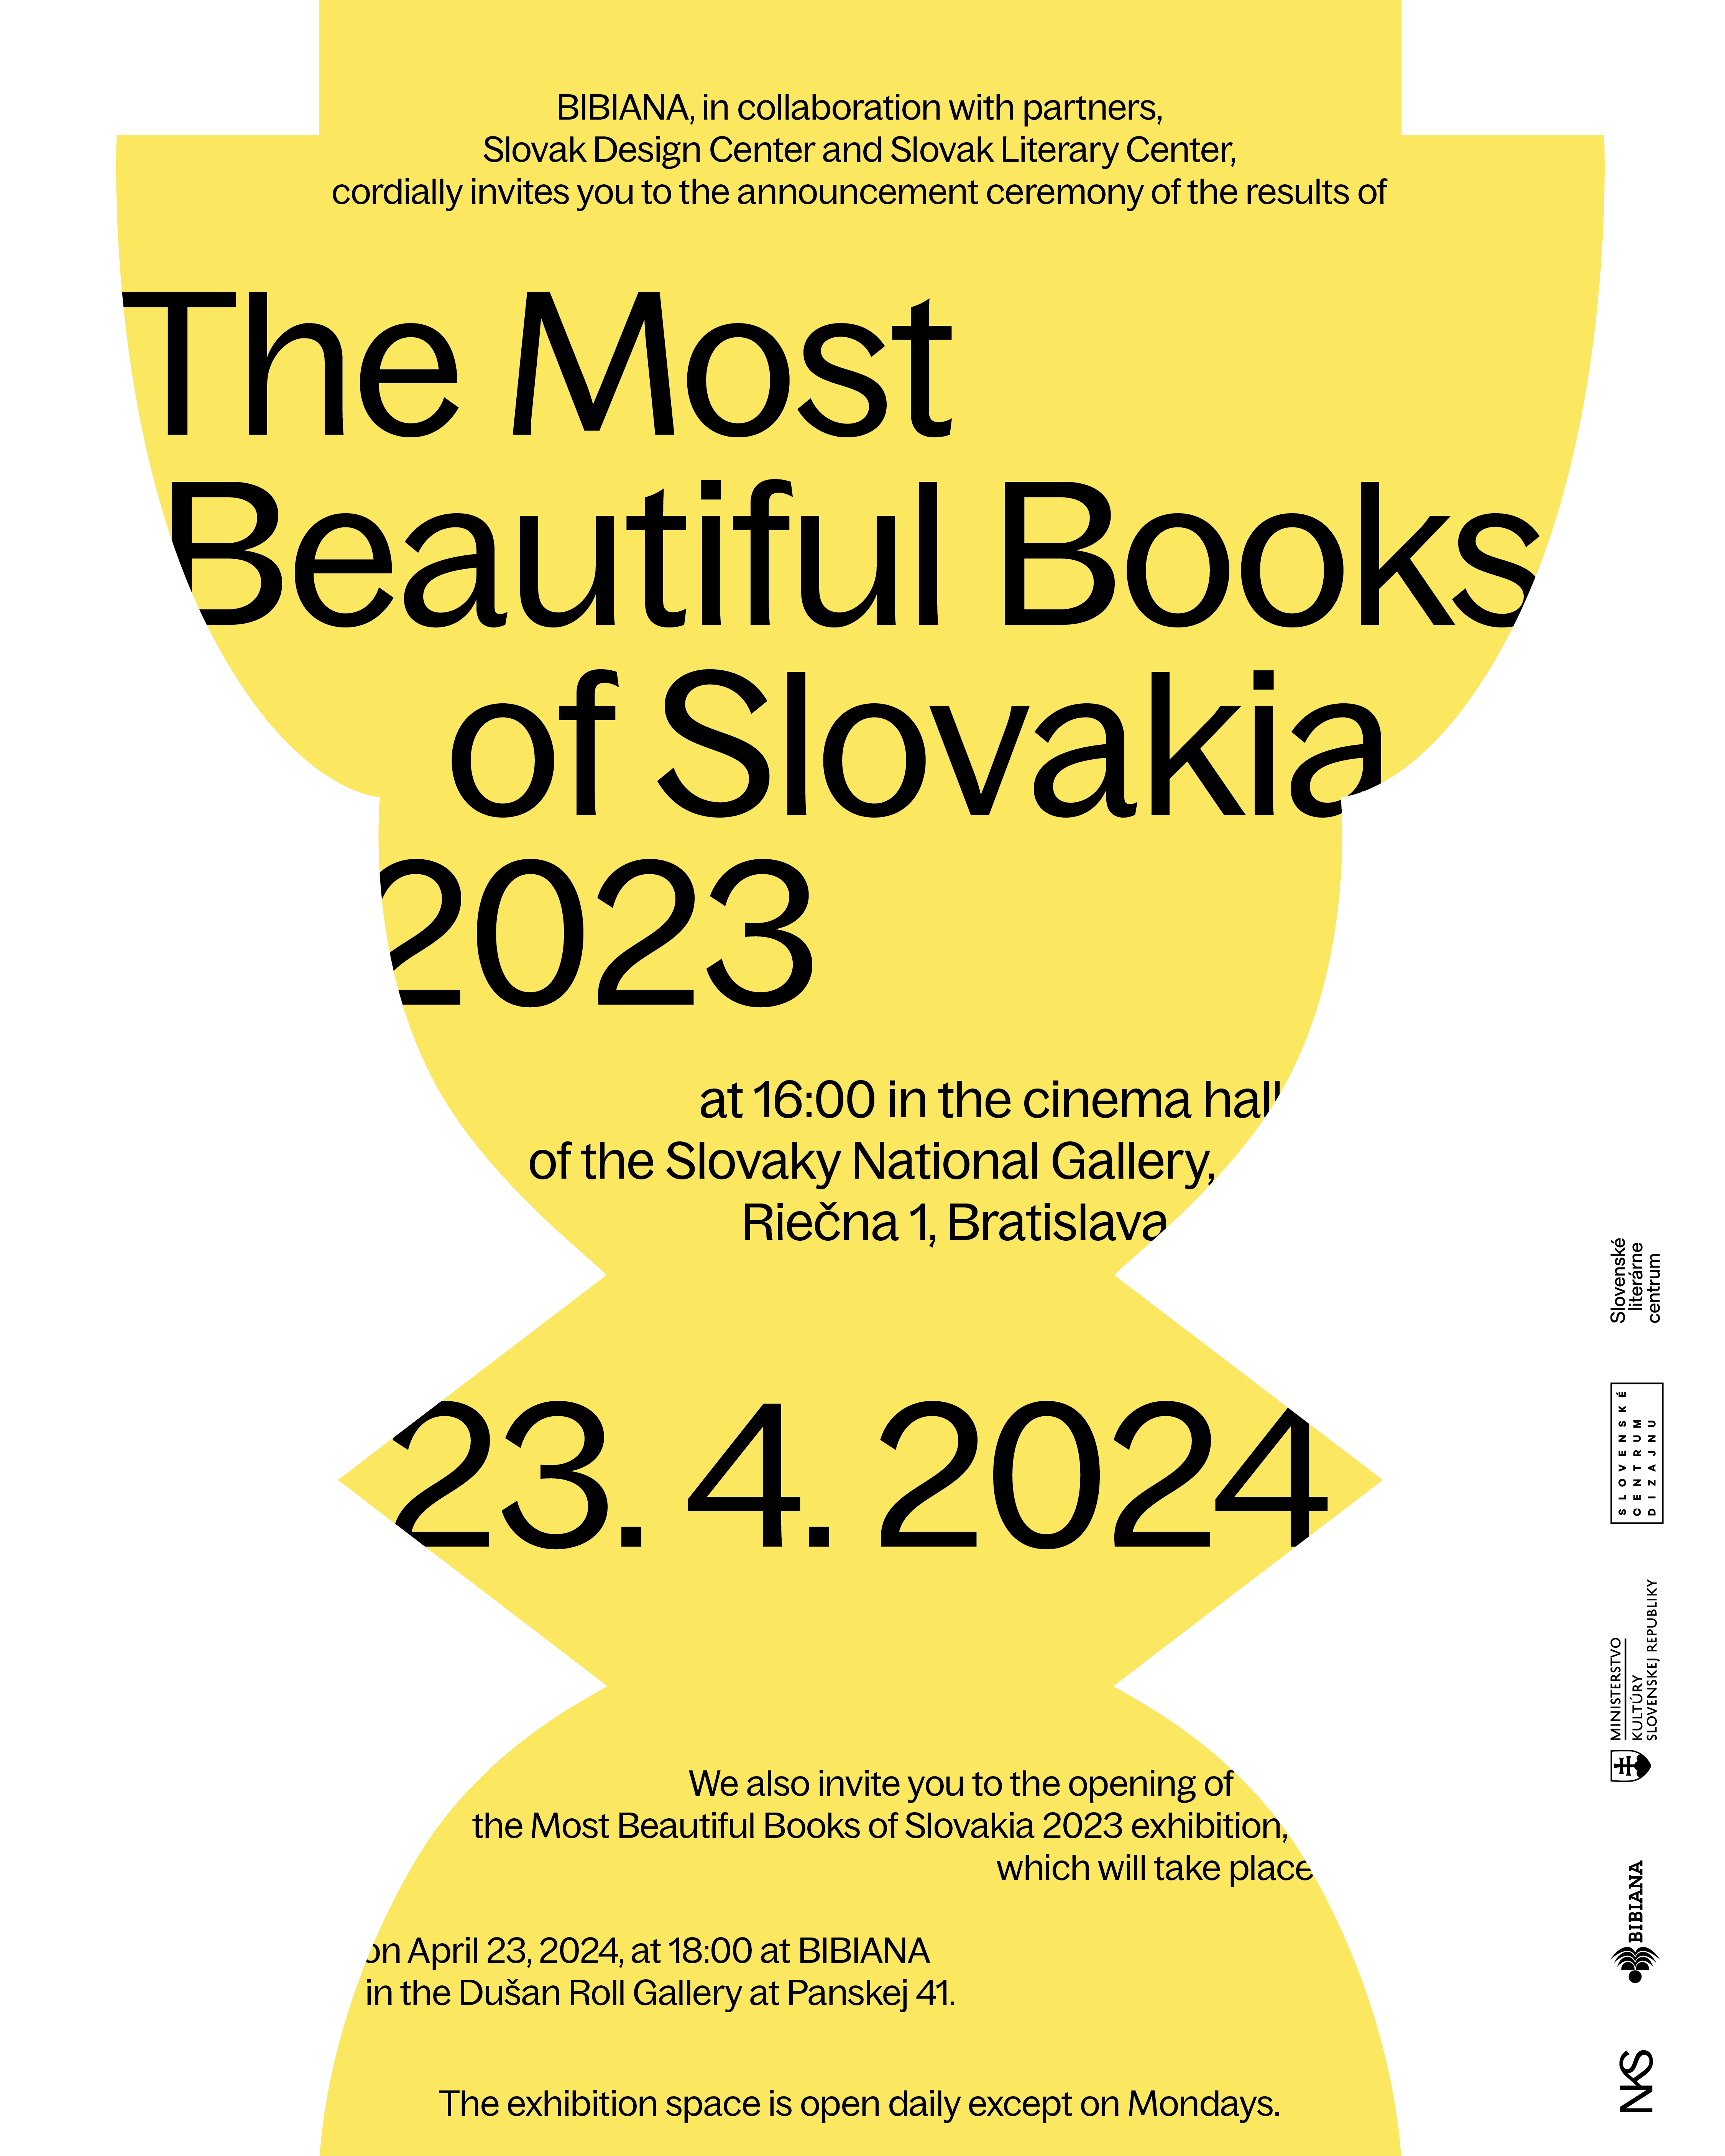 MOST BEAUTIFUL BOOKS OF SLOVAKIA 2023